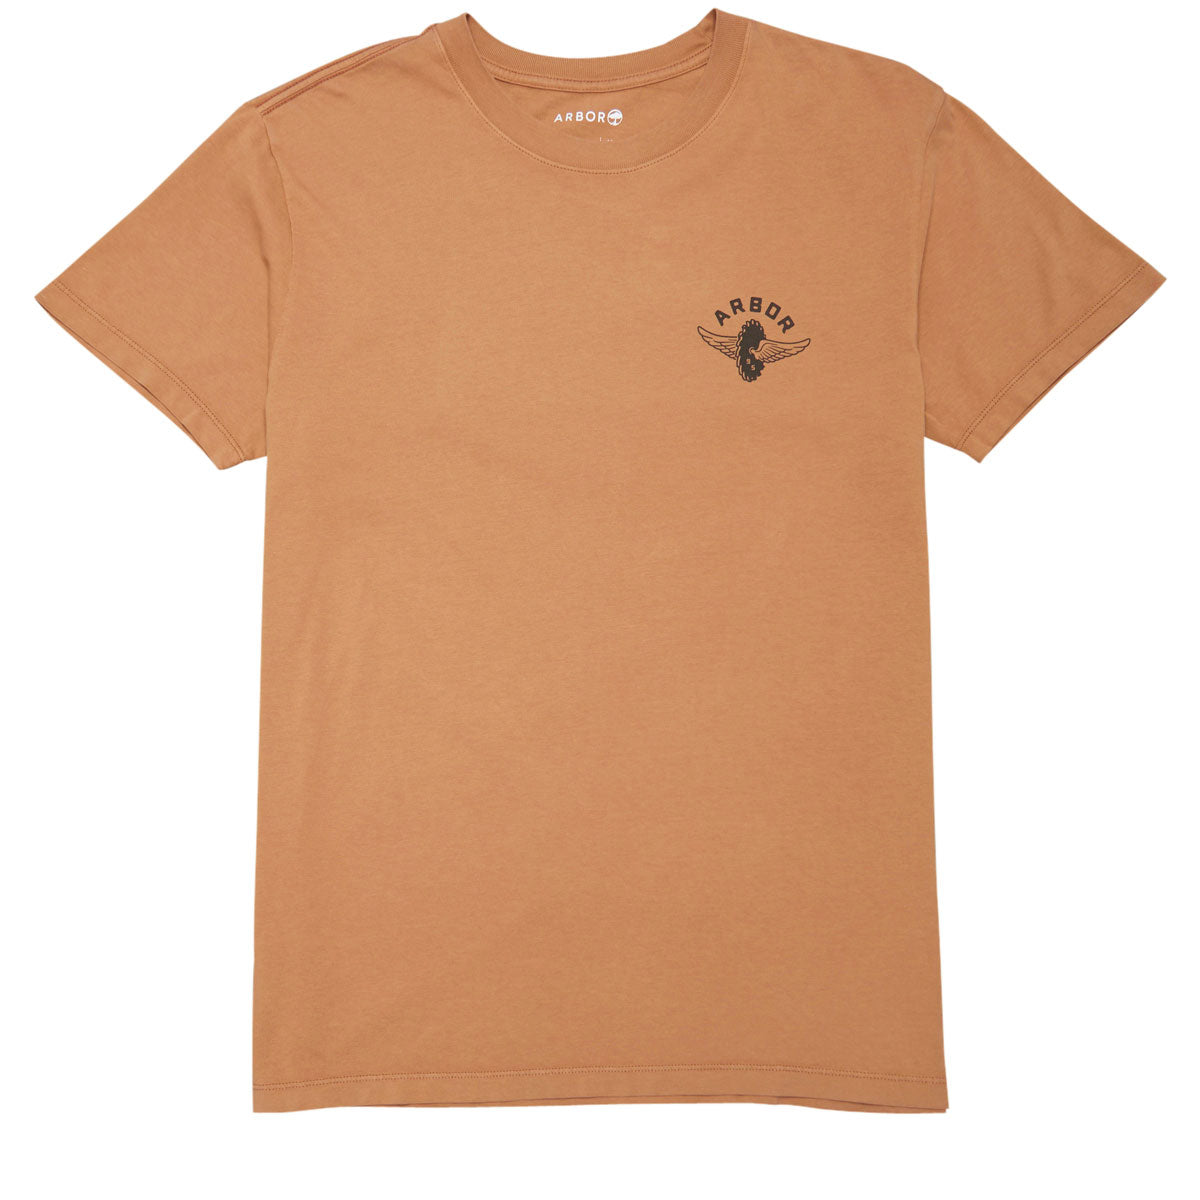 Arbor Woodwing T-Shirt - Camel image 2